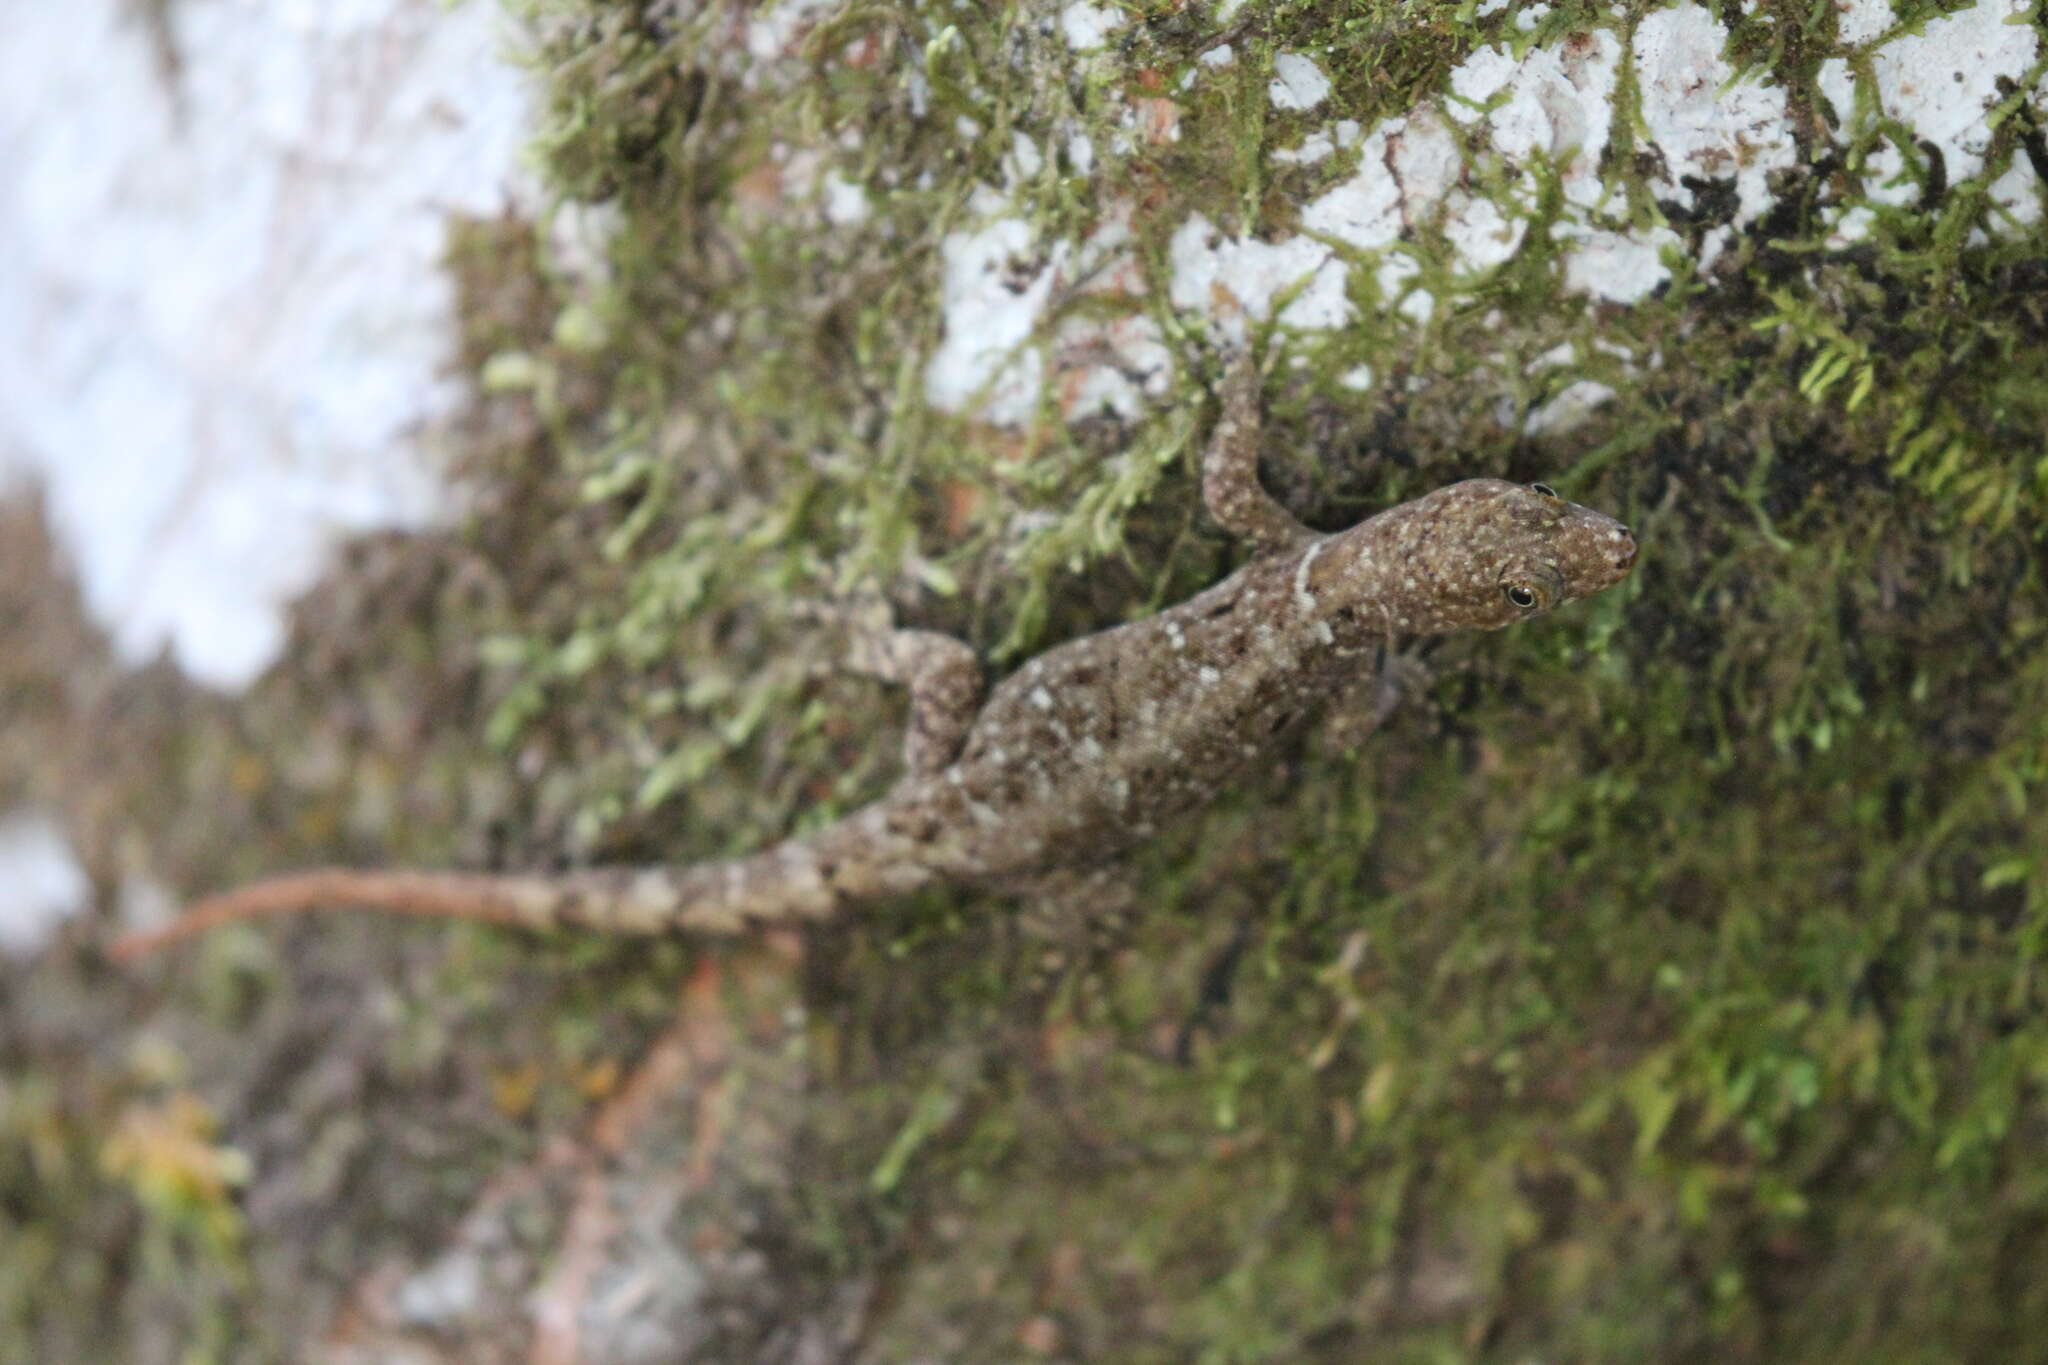 Image of Litter Gecko